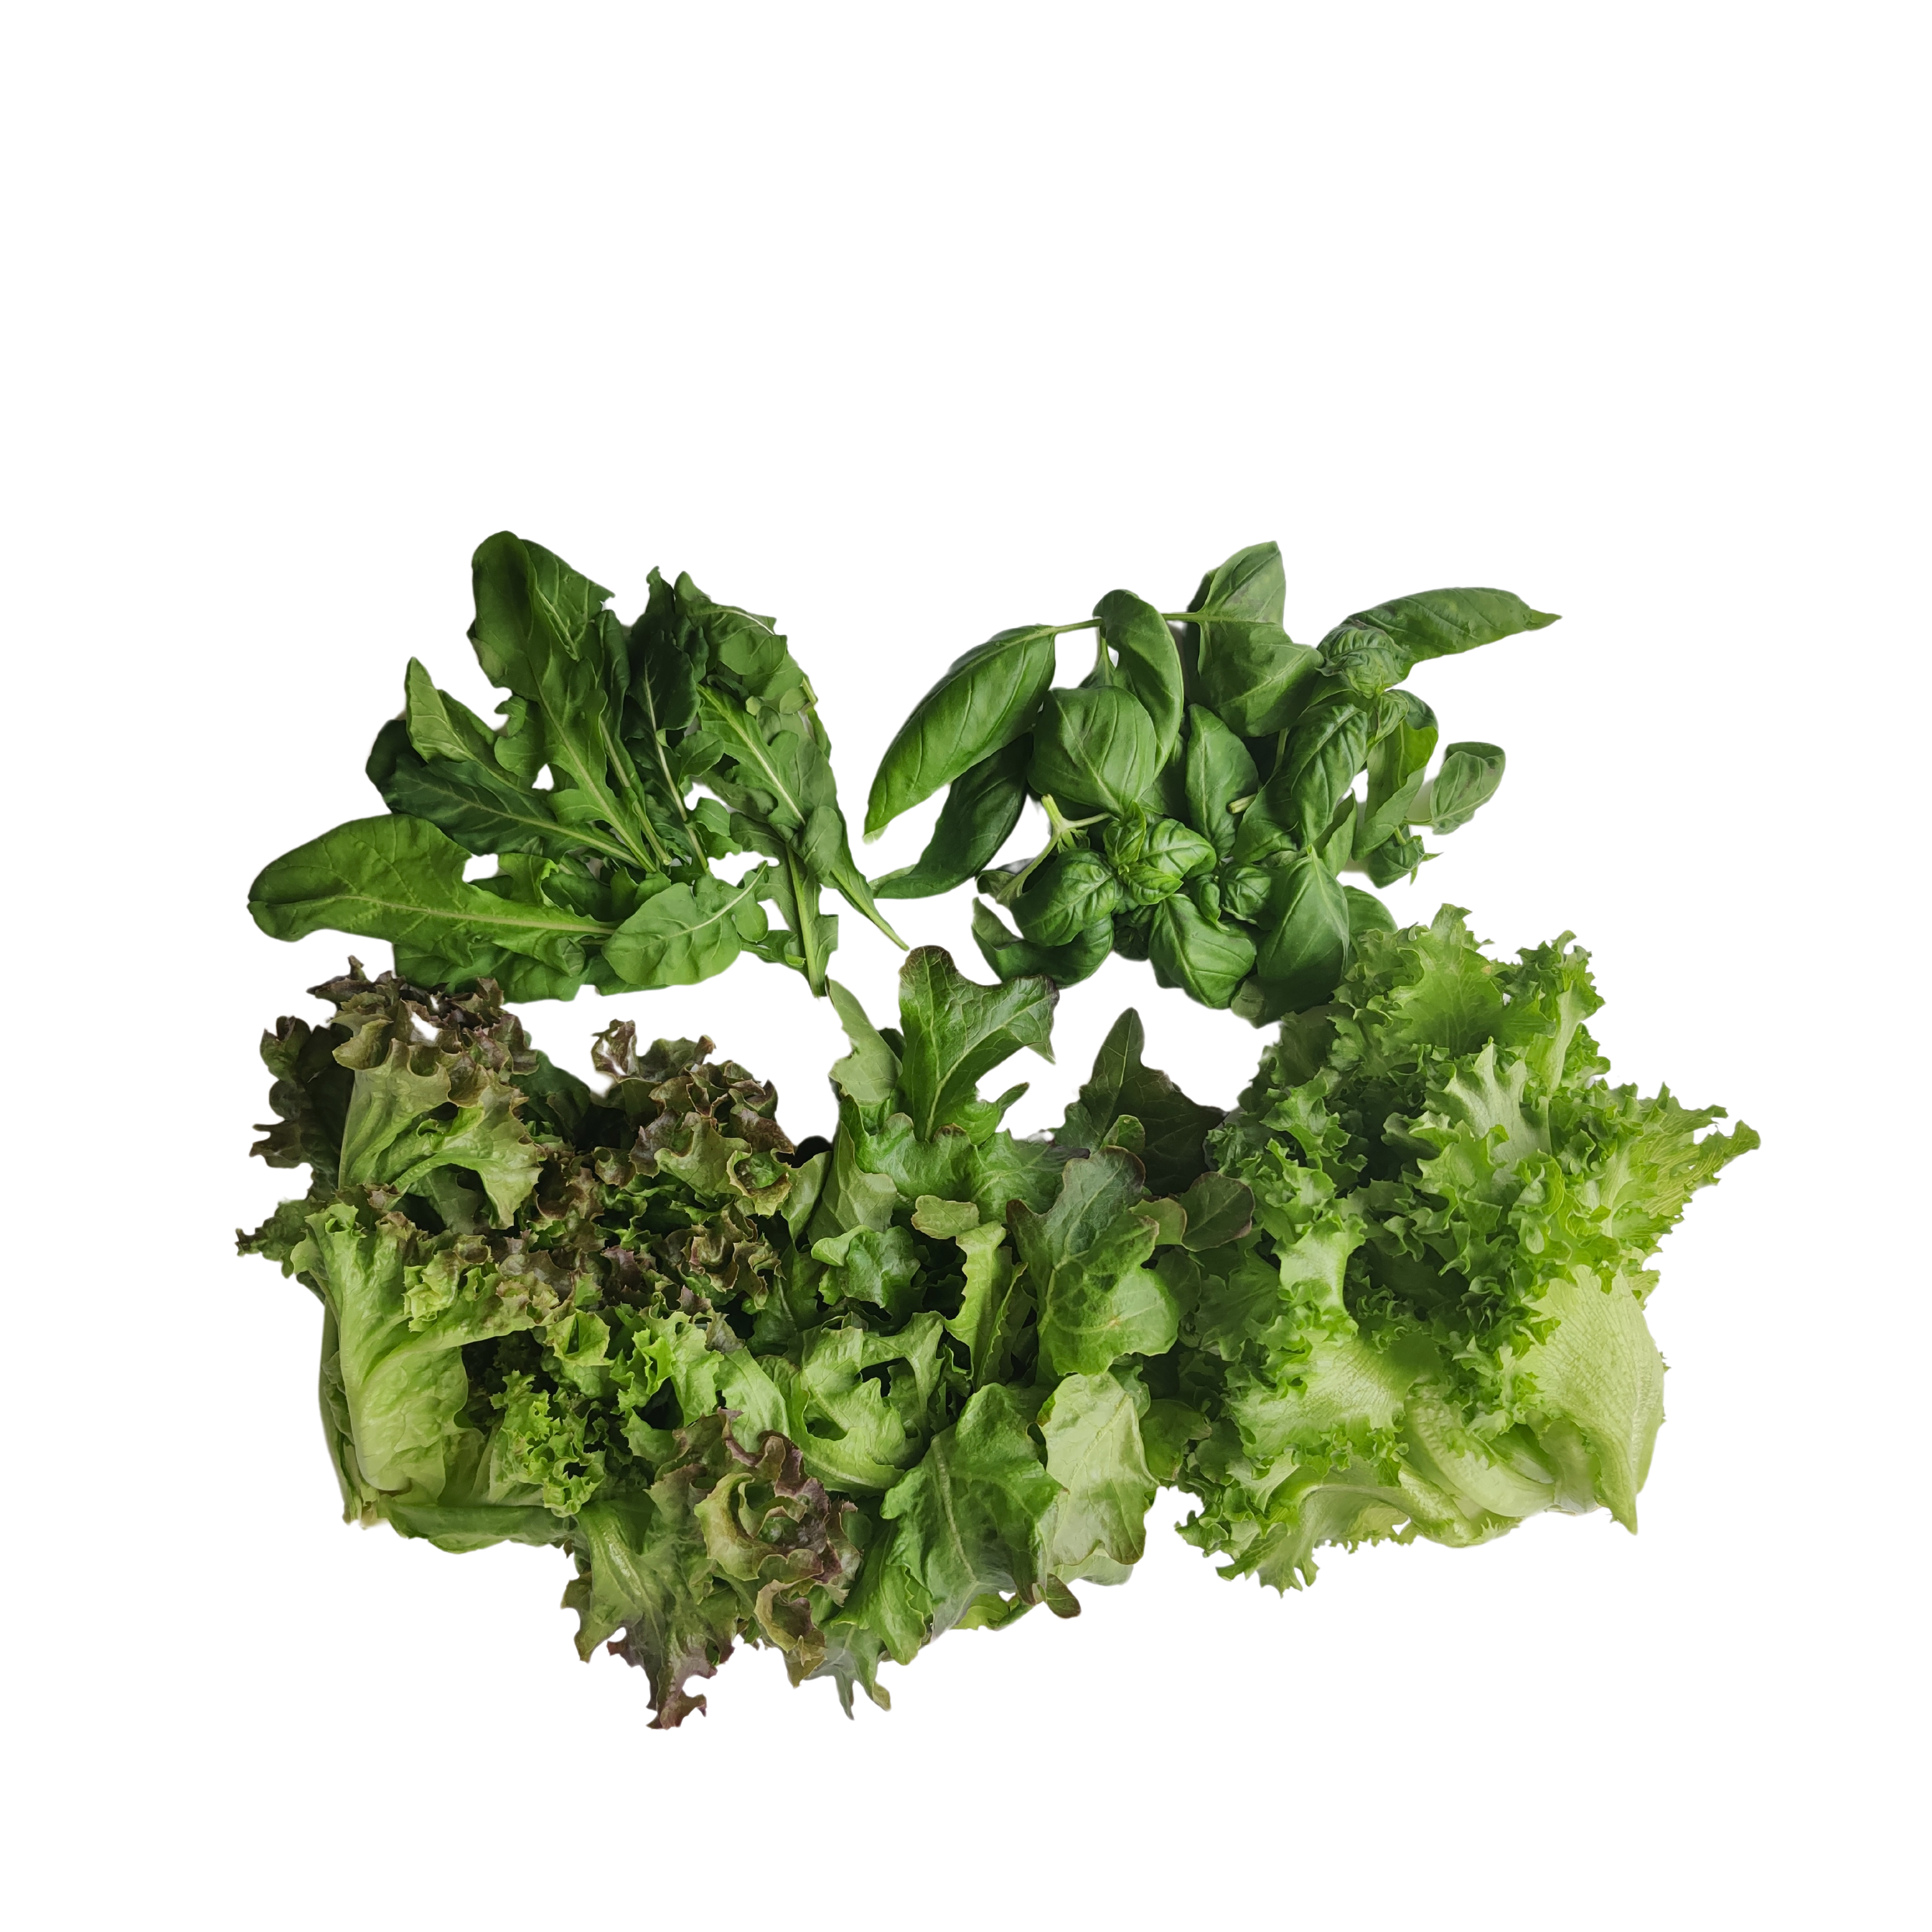 Small leafy bundle with lettuce, arugula, basil